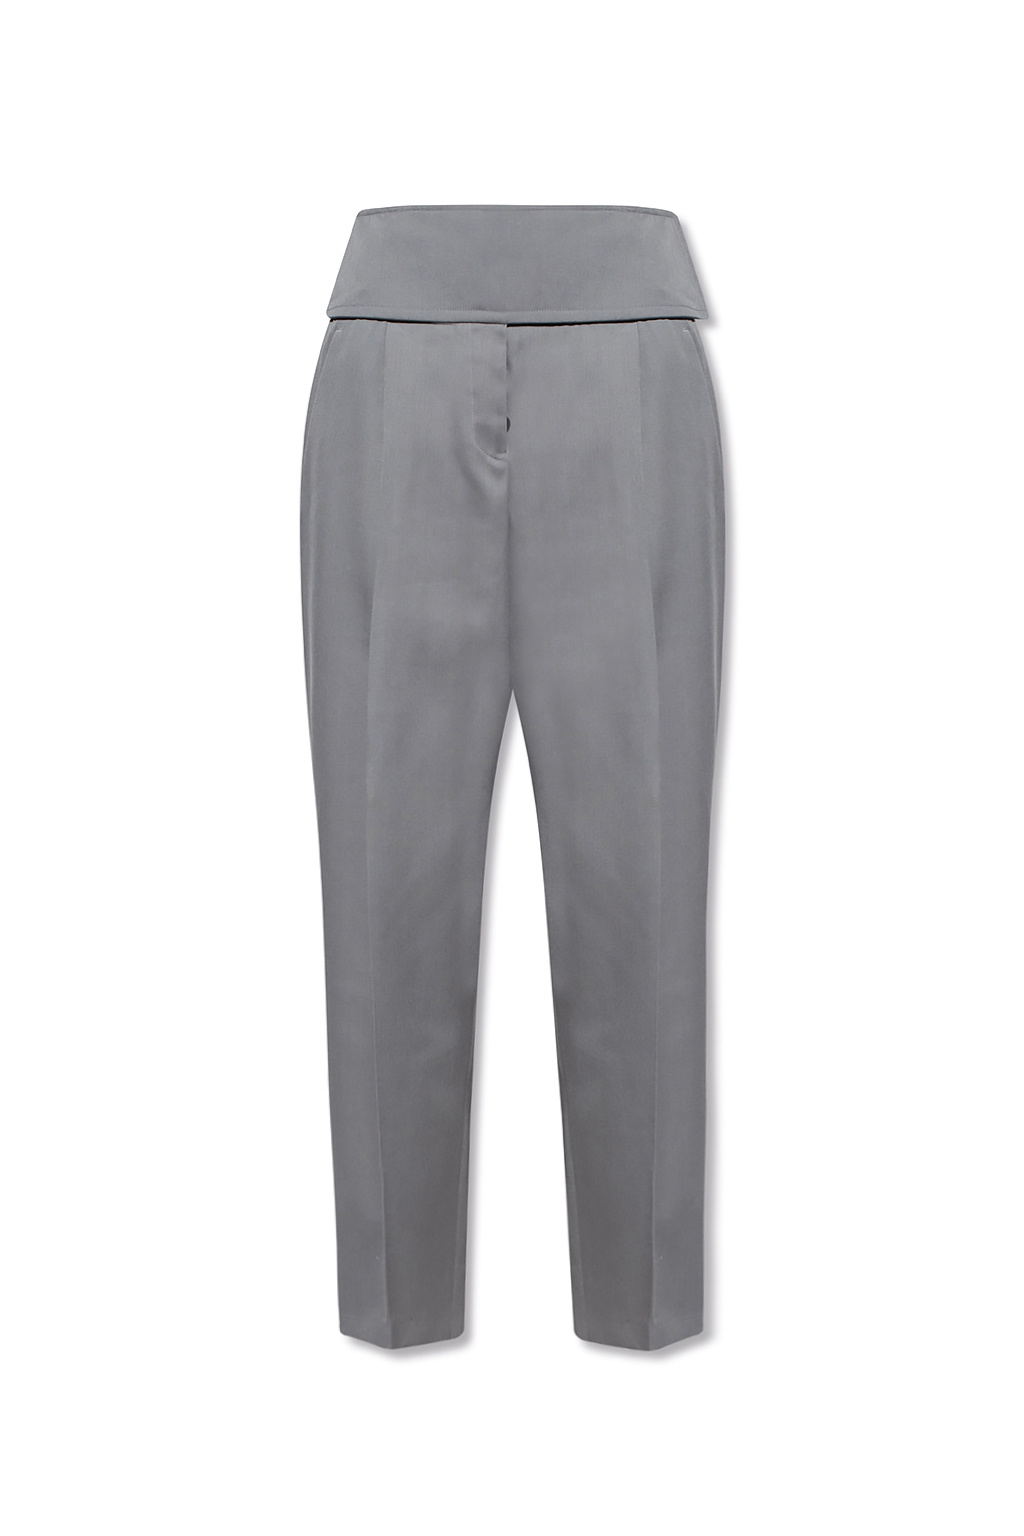 JIL SANDER High-waisted trousers